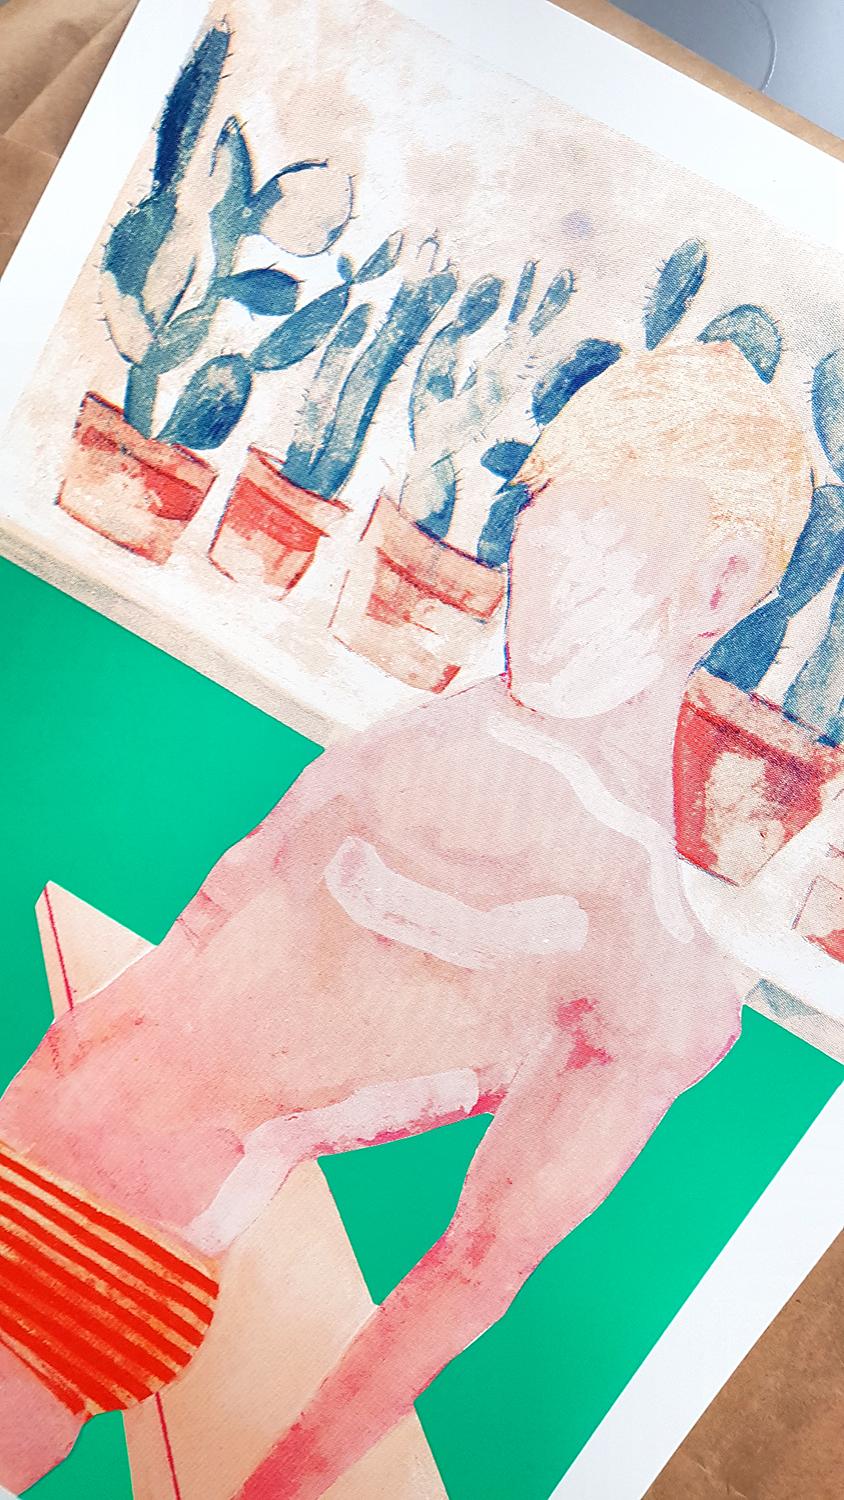 Pool Boy - Aqua, Pop Art screen-print, Figurative art, David Hockney style art For Sale 4